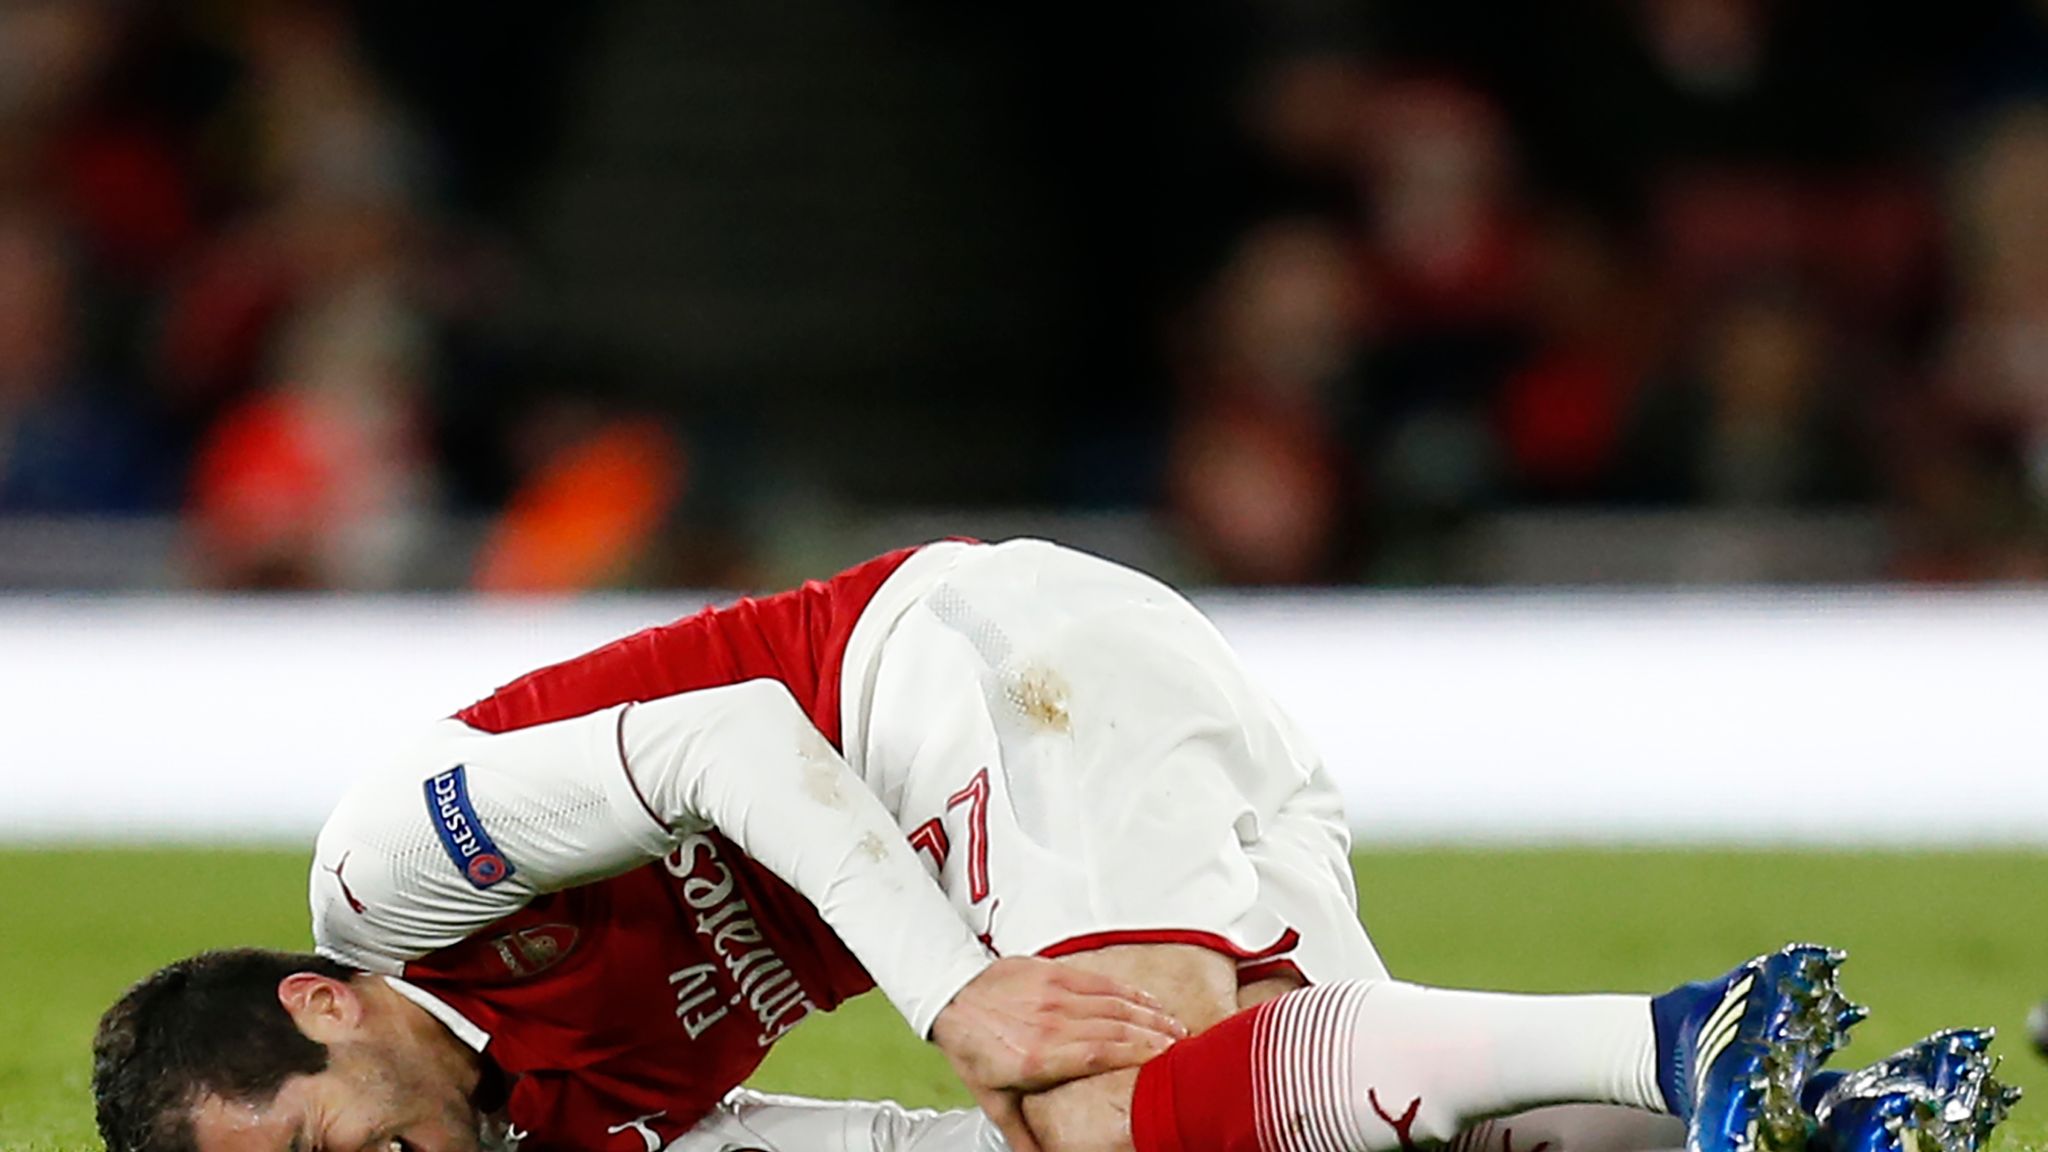 Arsenal's Henrikh Mkhitaryan out for six weeks due to foot injury